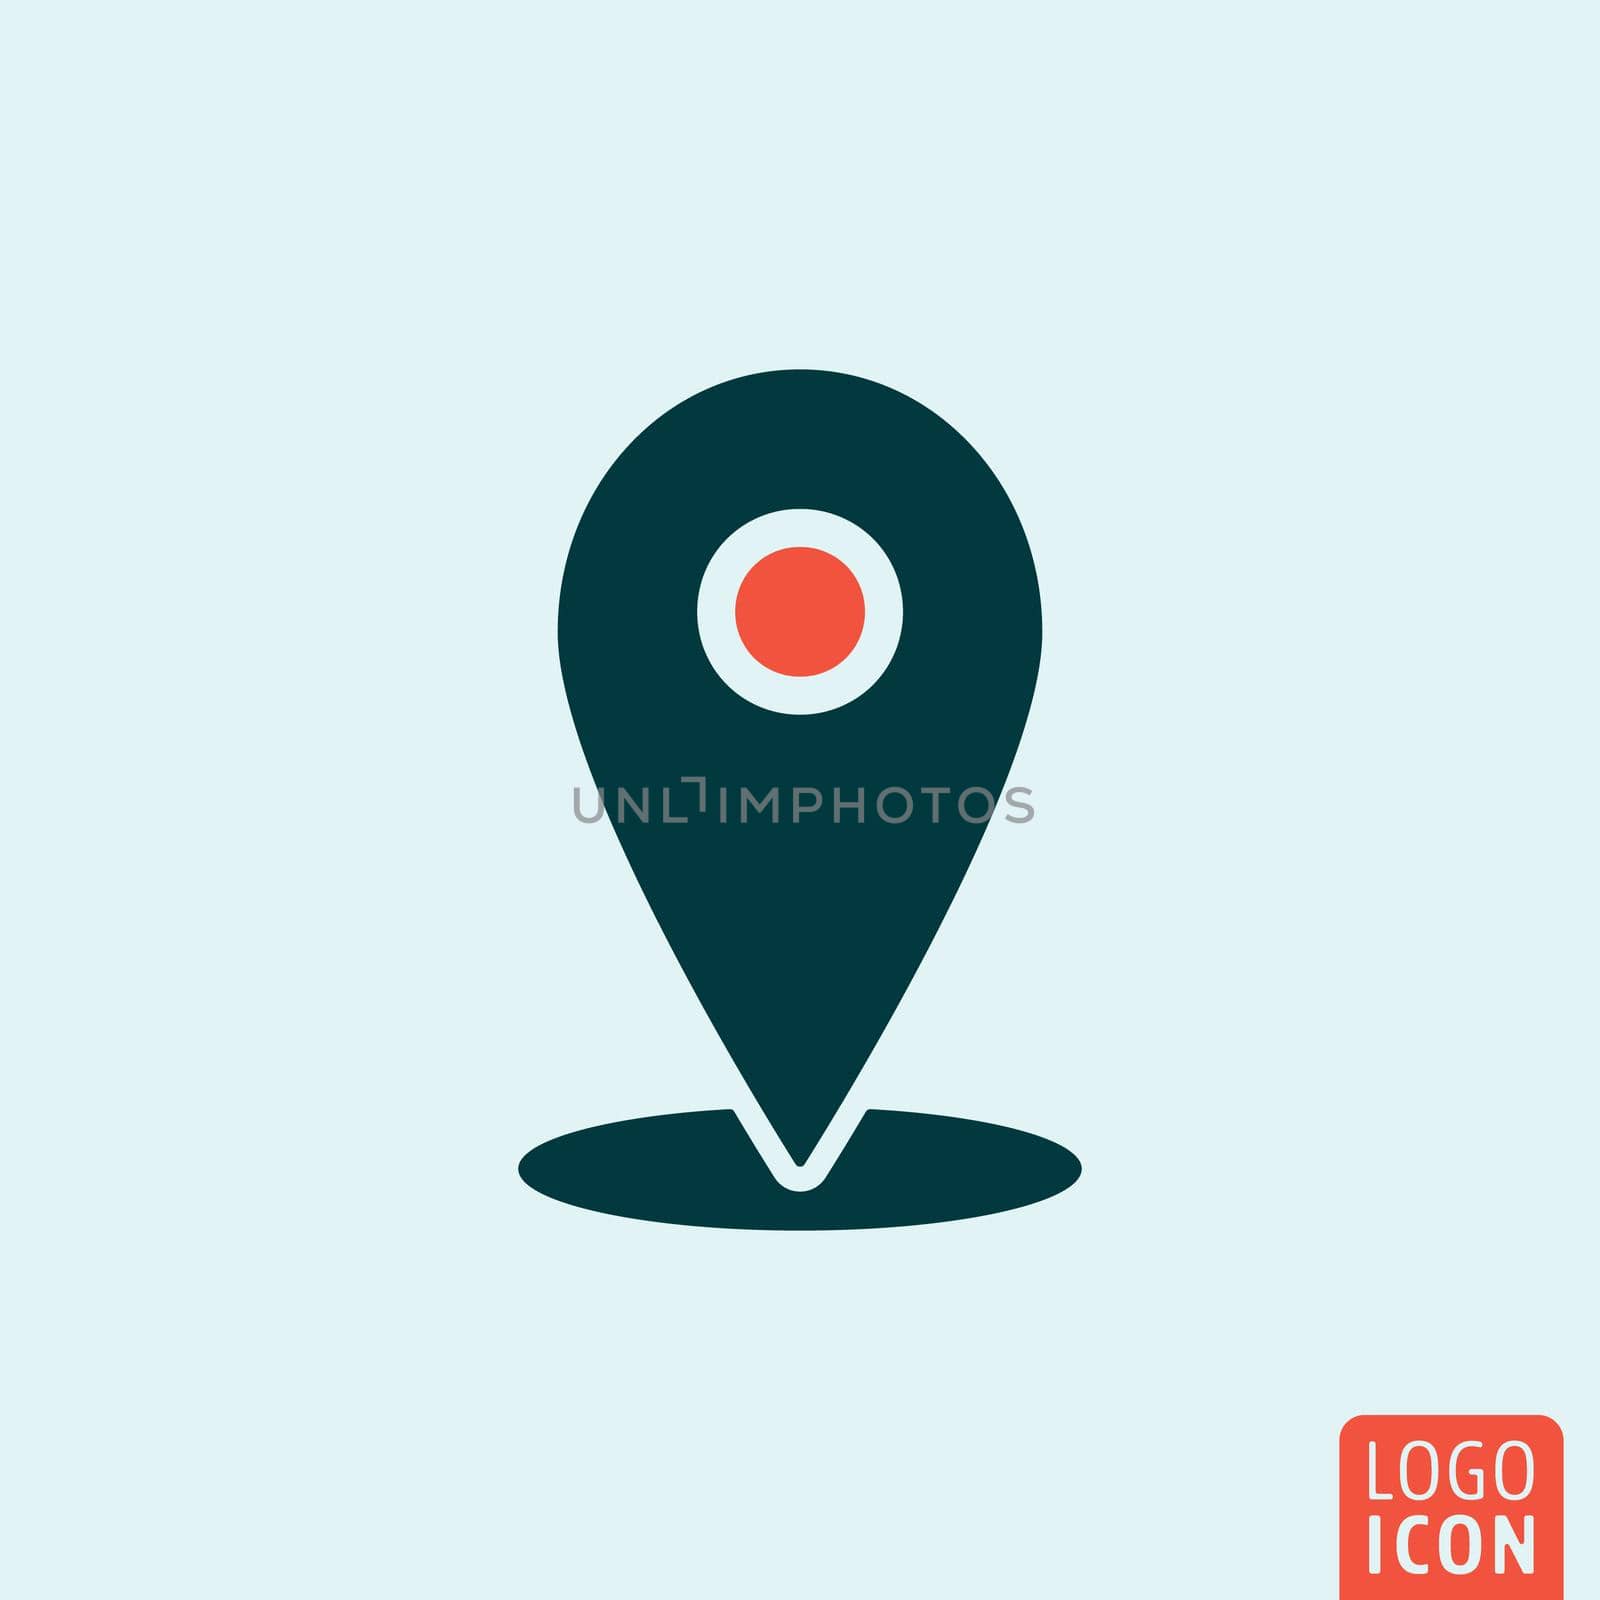 Location mark icon. Location mark logo. Location mark symbol. Location icon isolated minimal design. Location point icon. Check-in icon. Vector illustration.